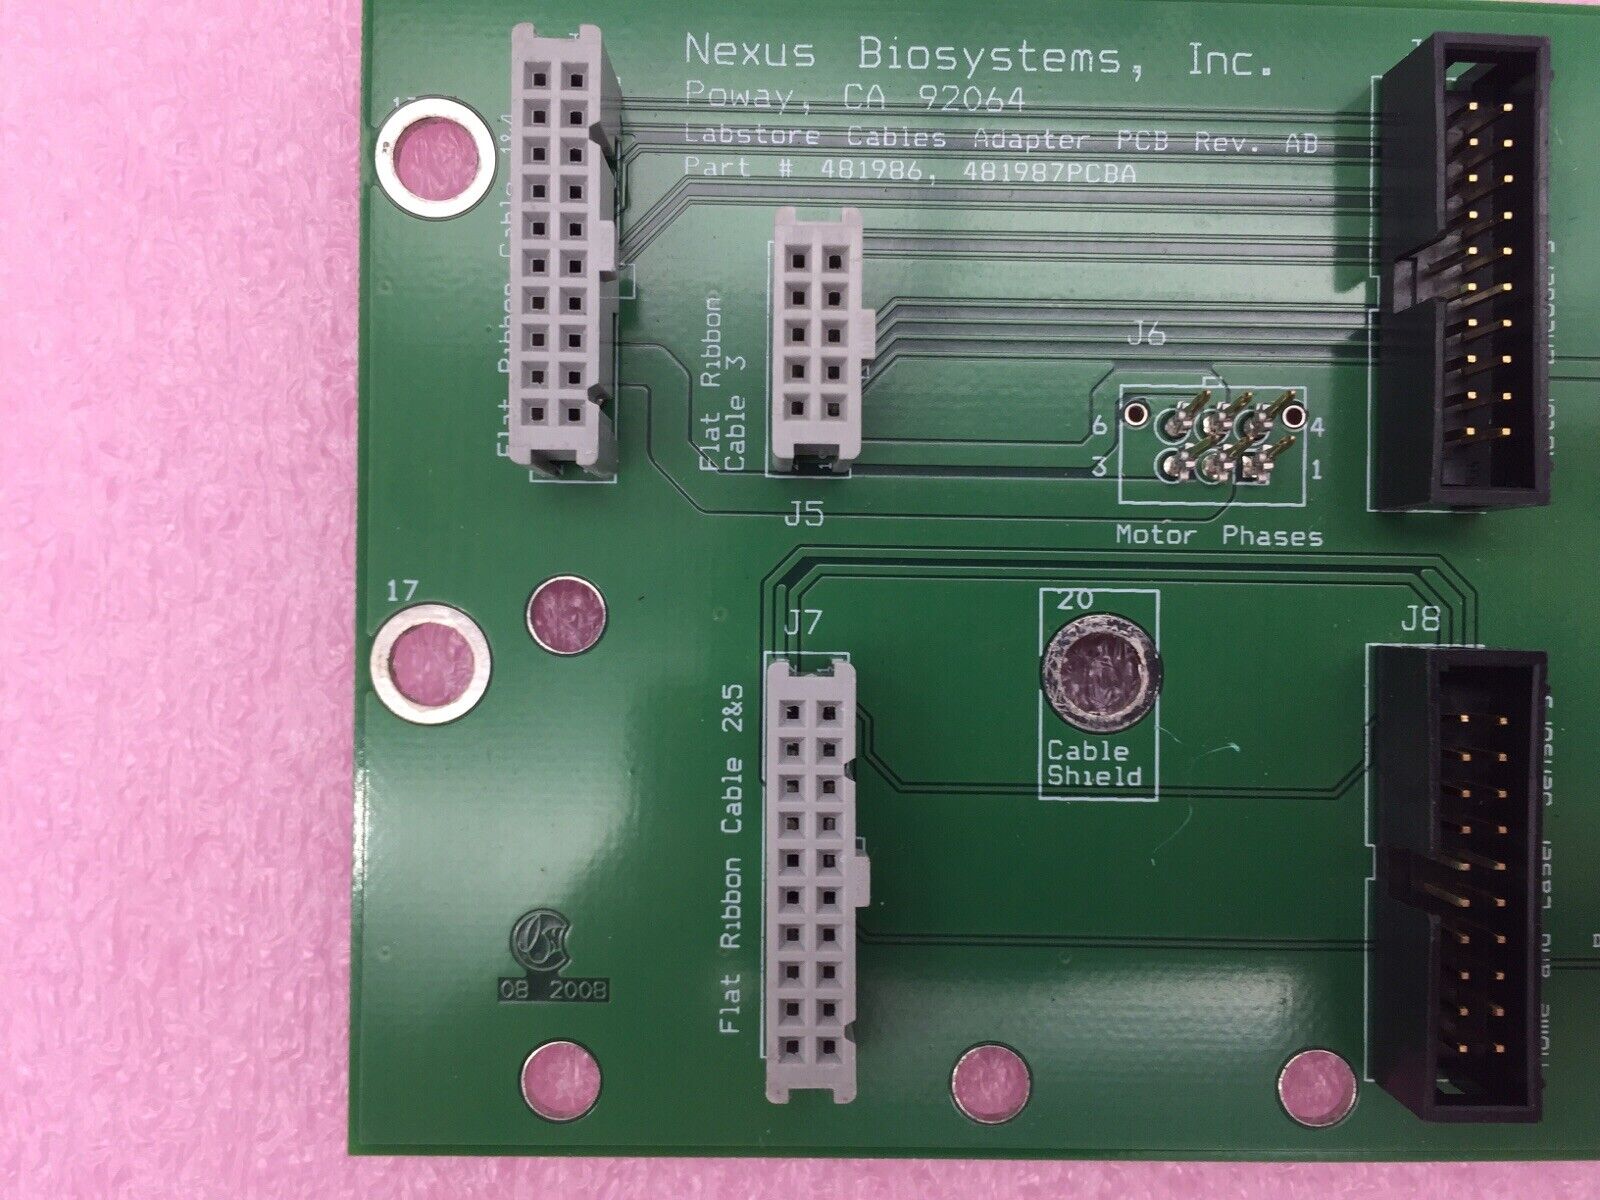 Nexus BioSystems 481986 PCB - Rev. AB - Replacement Part